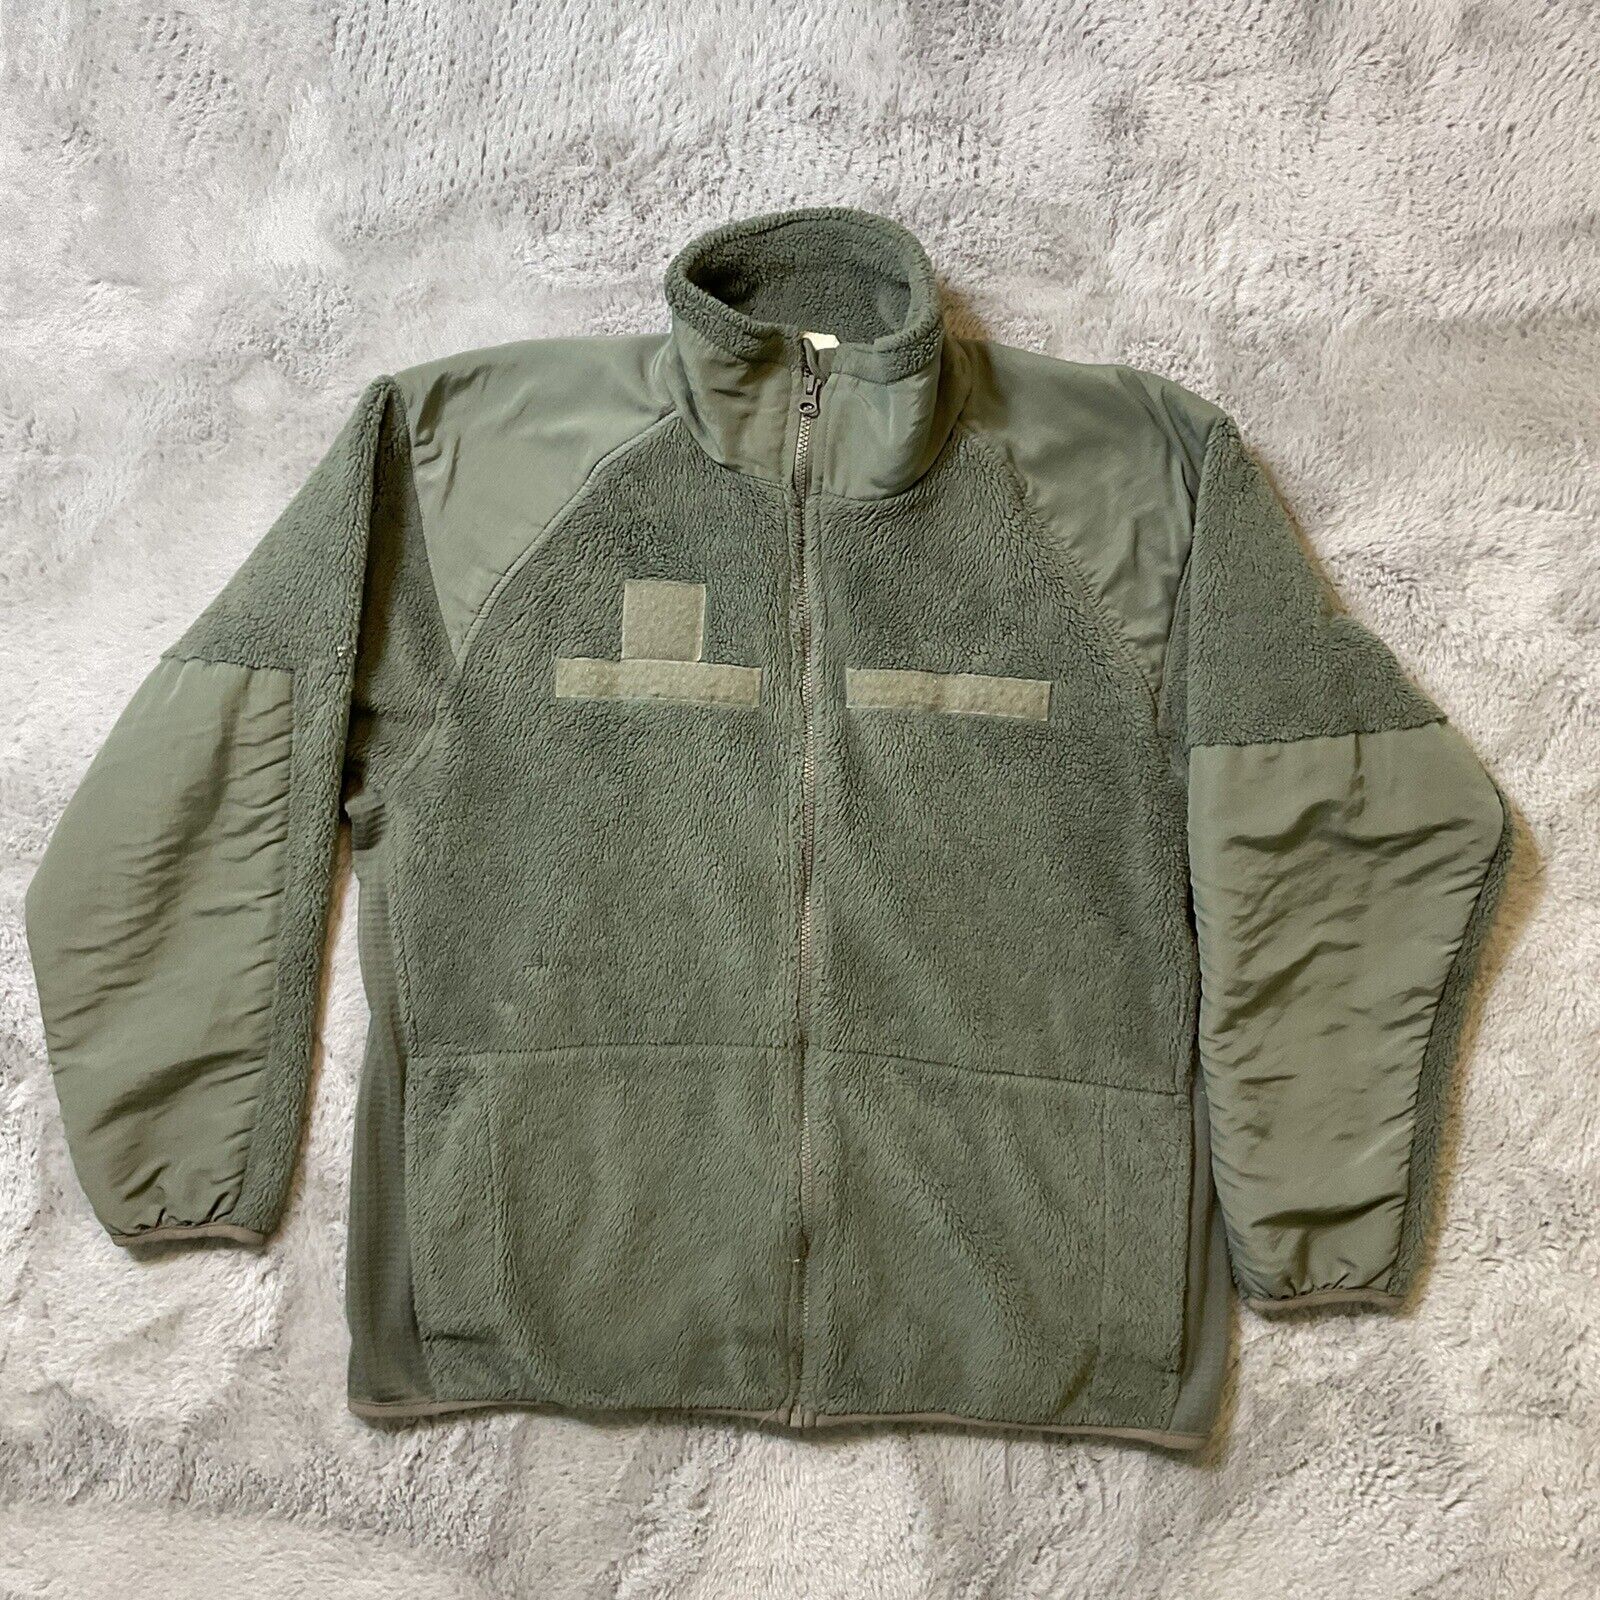 DAMAGED - US Military Army Gen 3 Green Polartec Fleece Jacket Size Medium Reg